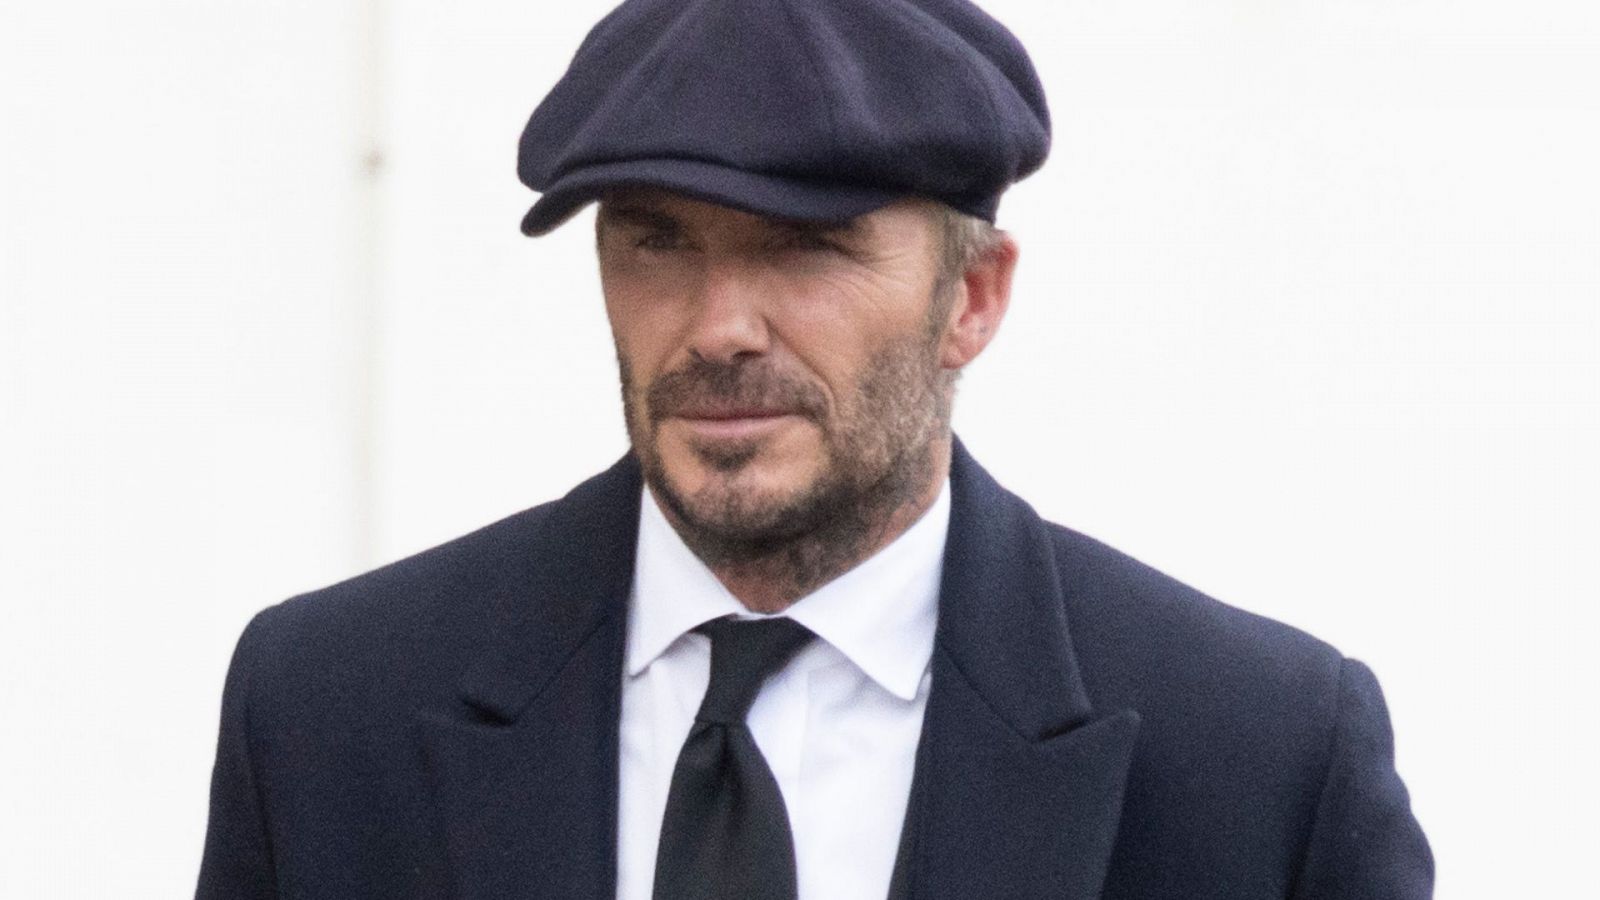 David Beckham co traje, corbata y gorra negra